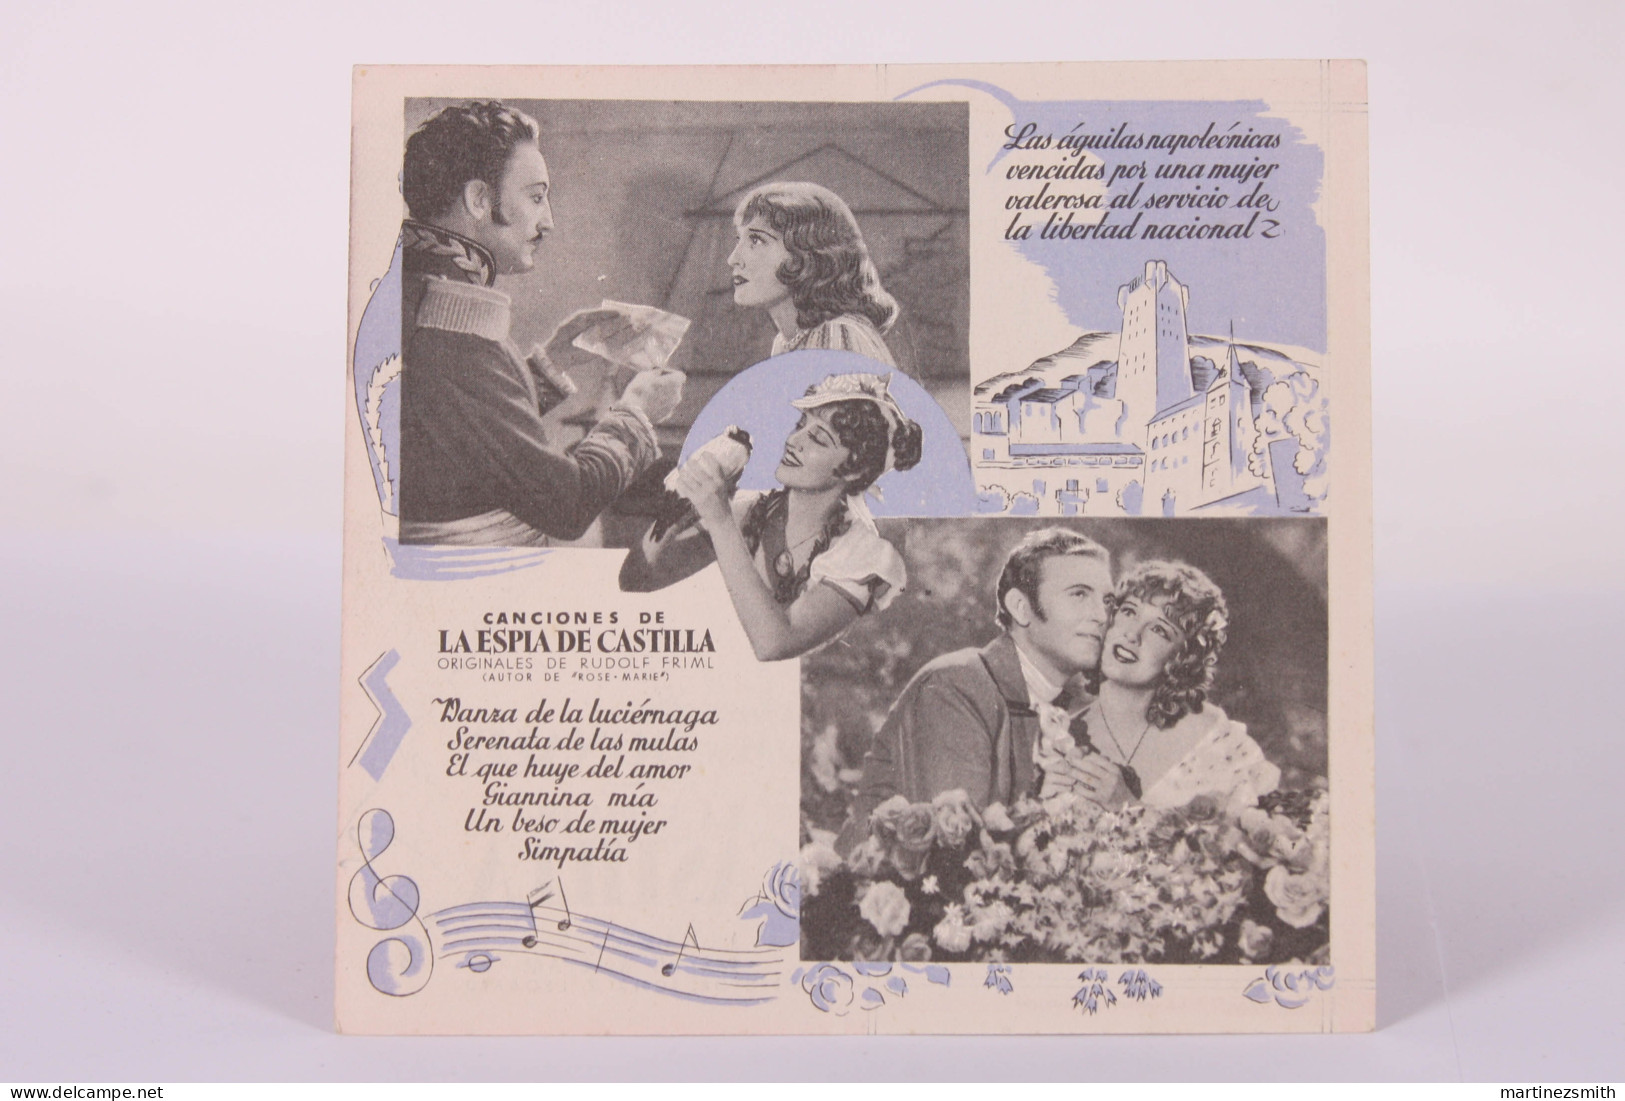 Original 1940's The Firefly / Movie Advt Brochure - Jeanette MacDonald, Allan Jones, Warren William - 11,5 X 11 Cm - Cinema Advertisement